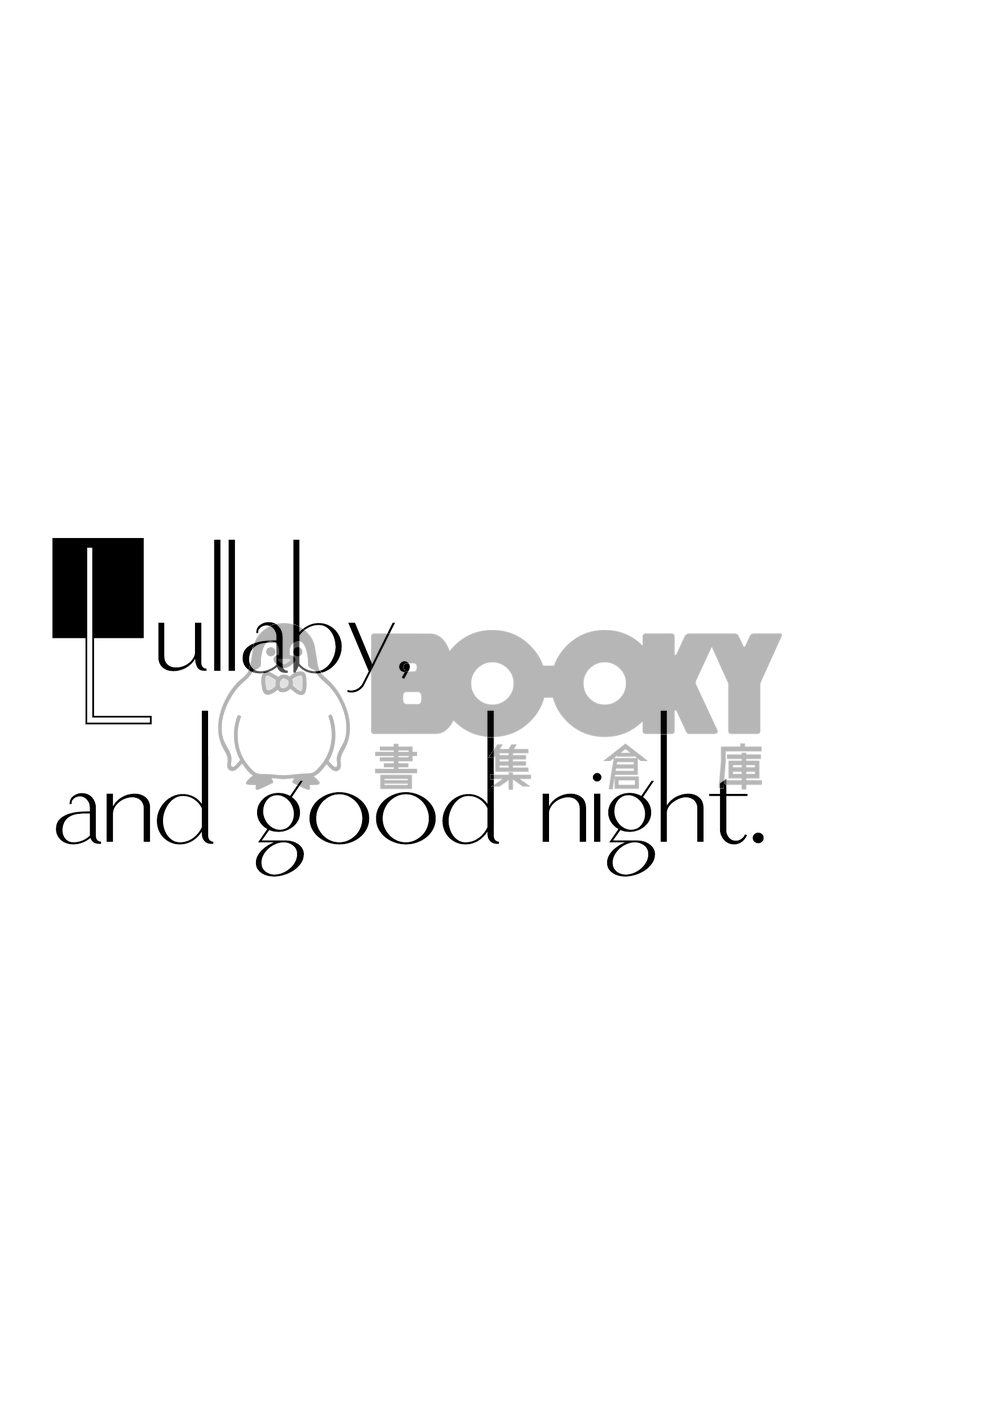 Lullaby, and good night. 試閱圖片